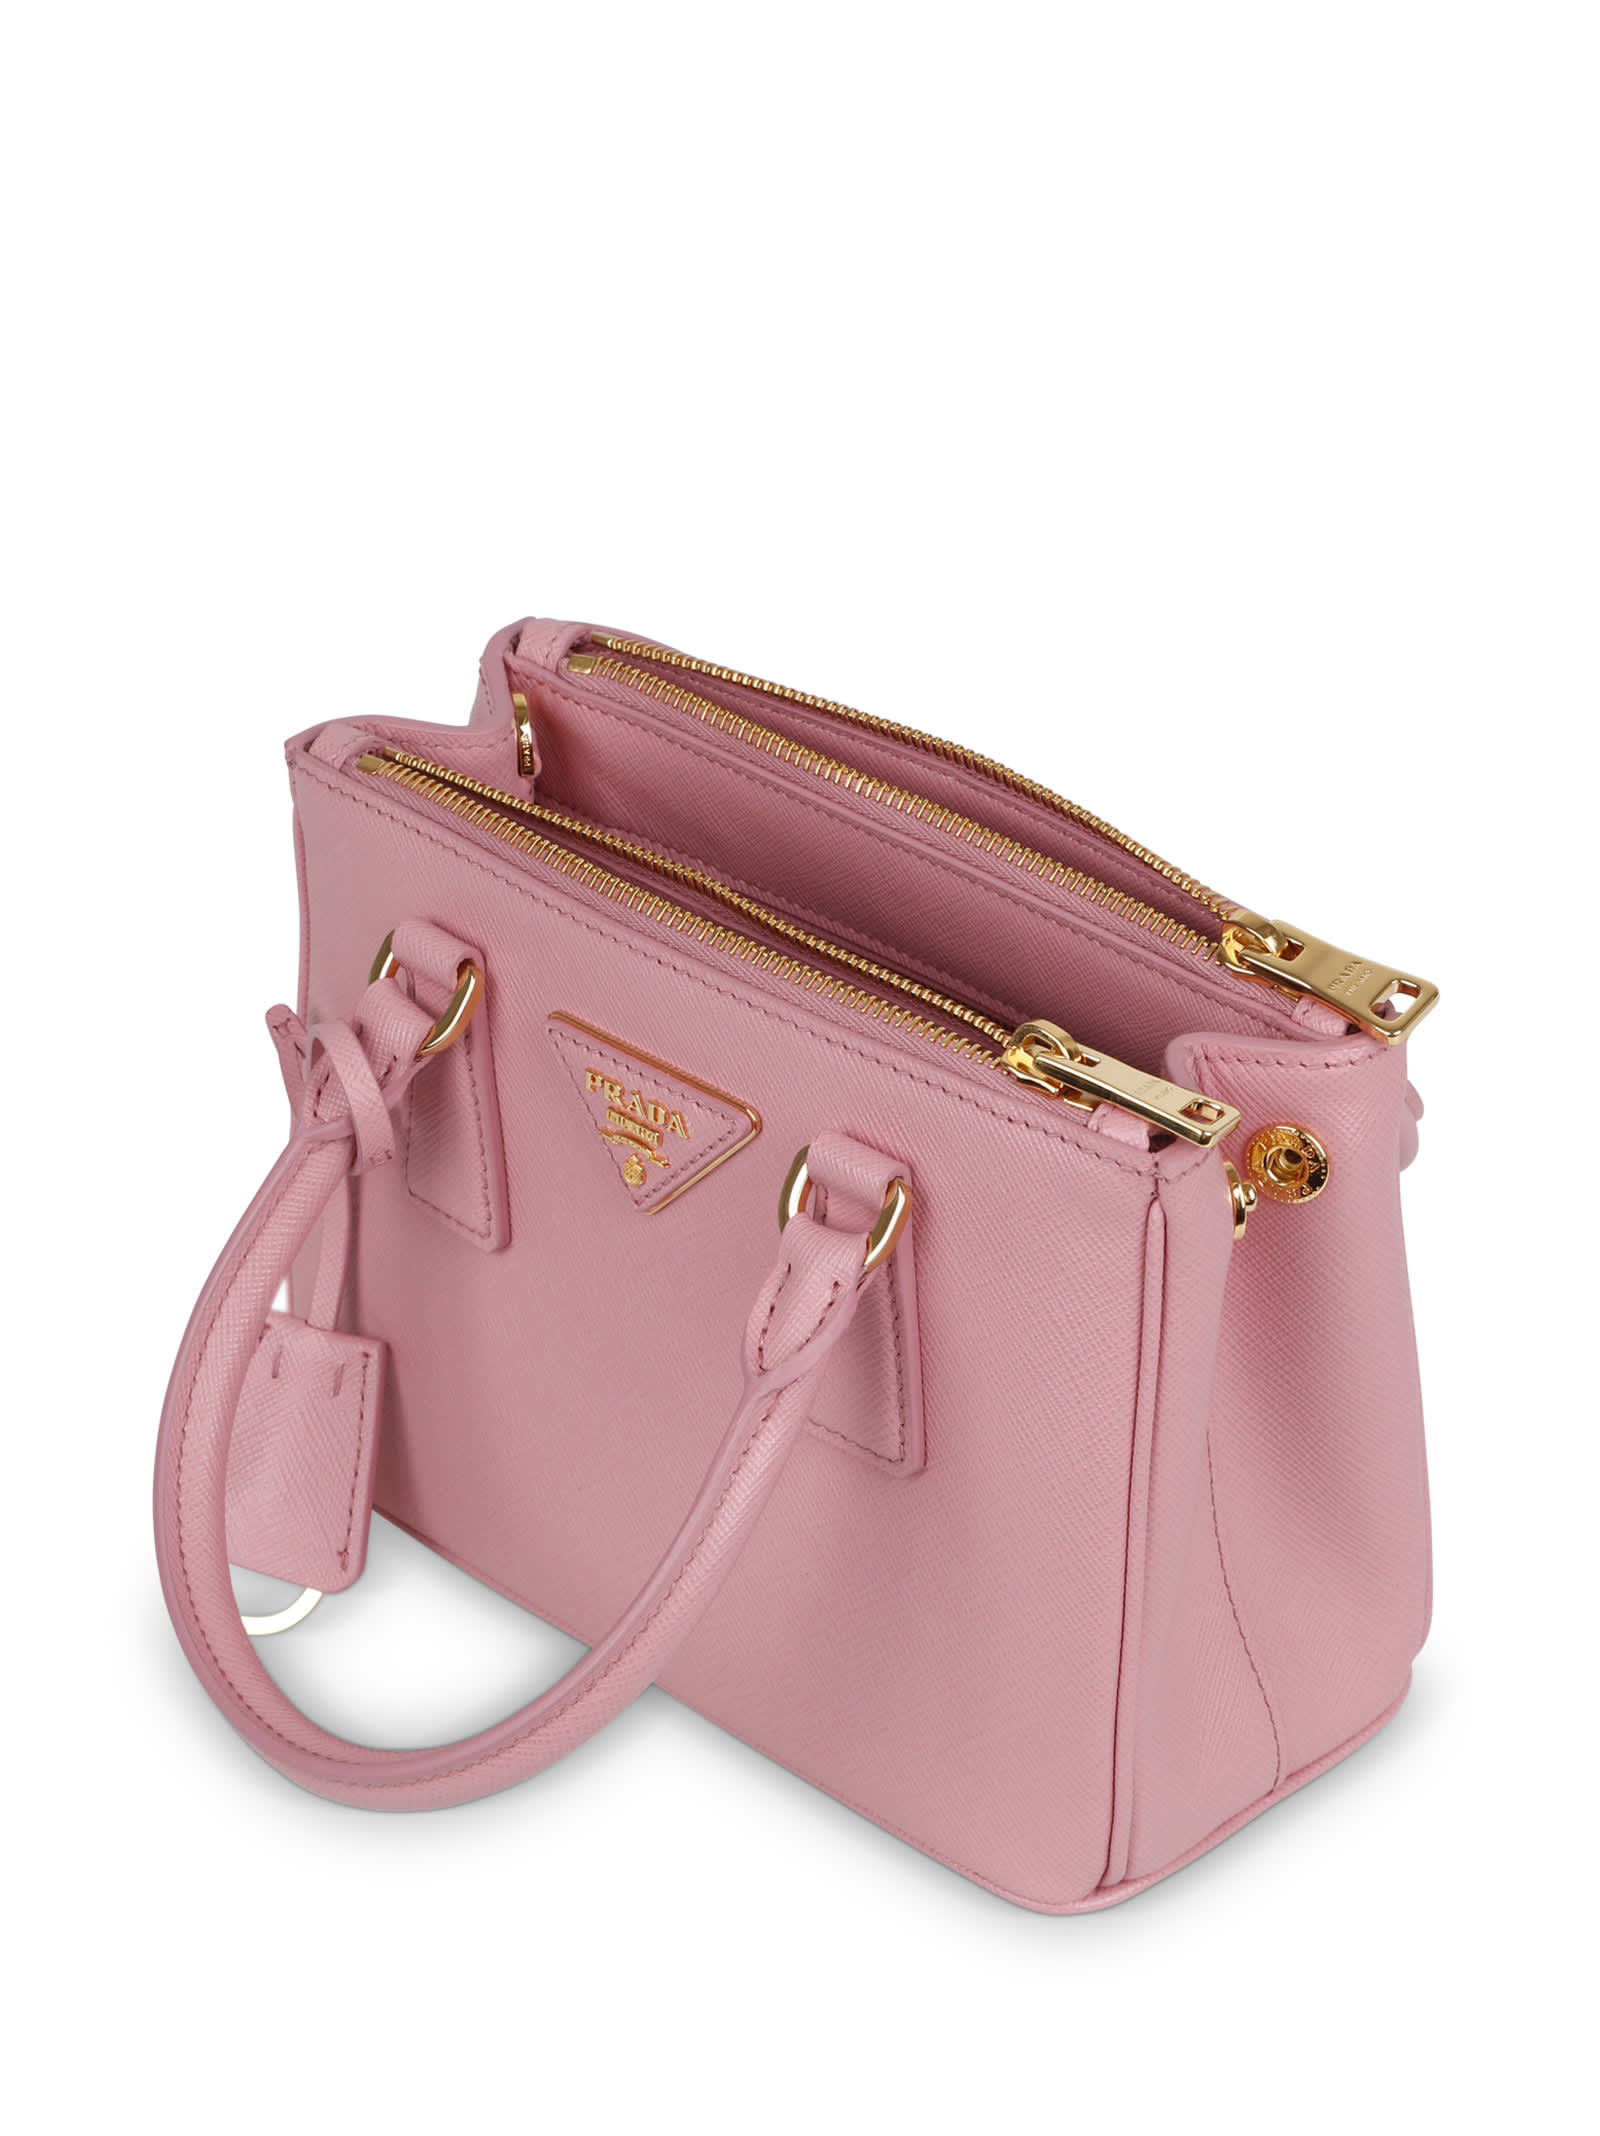 Shop Prada Galleria Mini Tote Bag In Pink